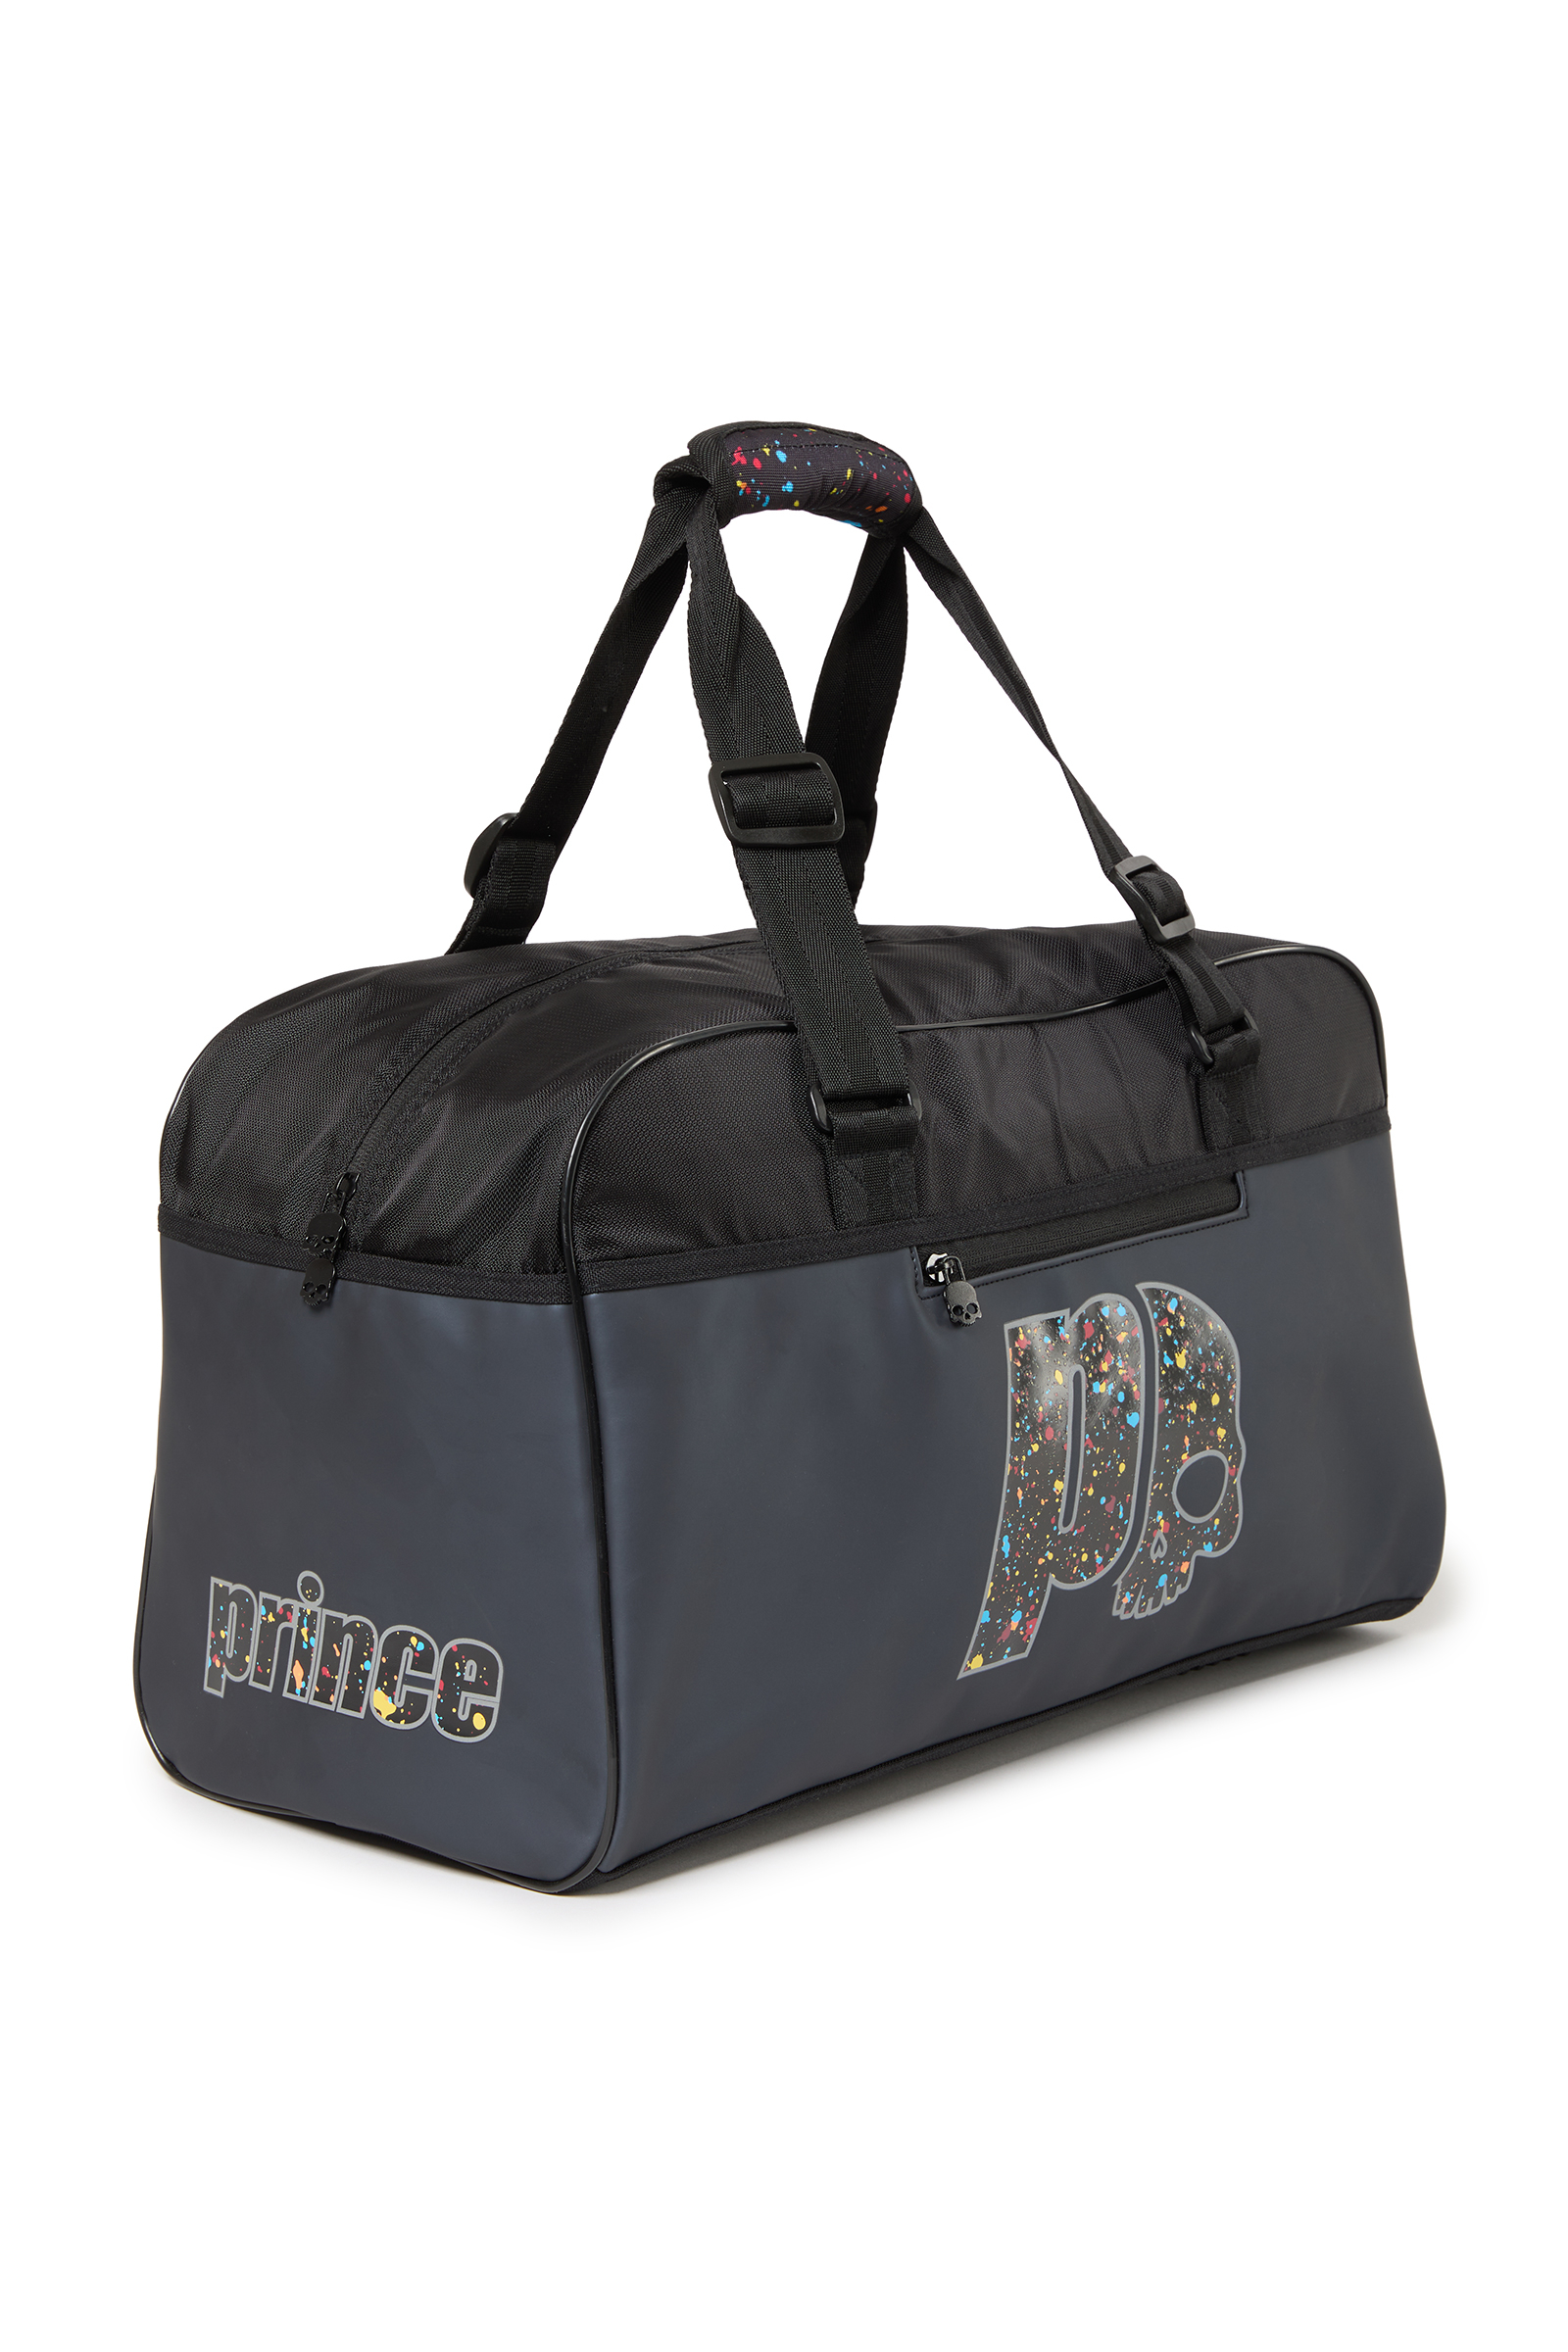 SPARK SMALL DUFFLE BAG PRINCE BY HYDROGEN - Accessories - Hydrogen - Luxury Sportwear